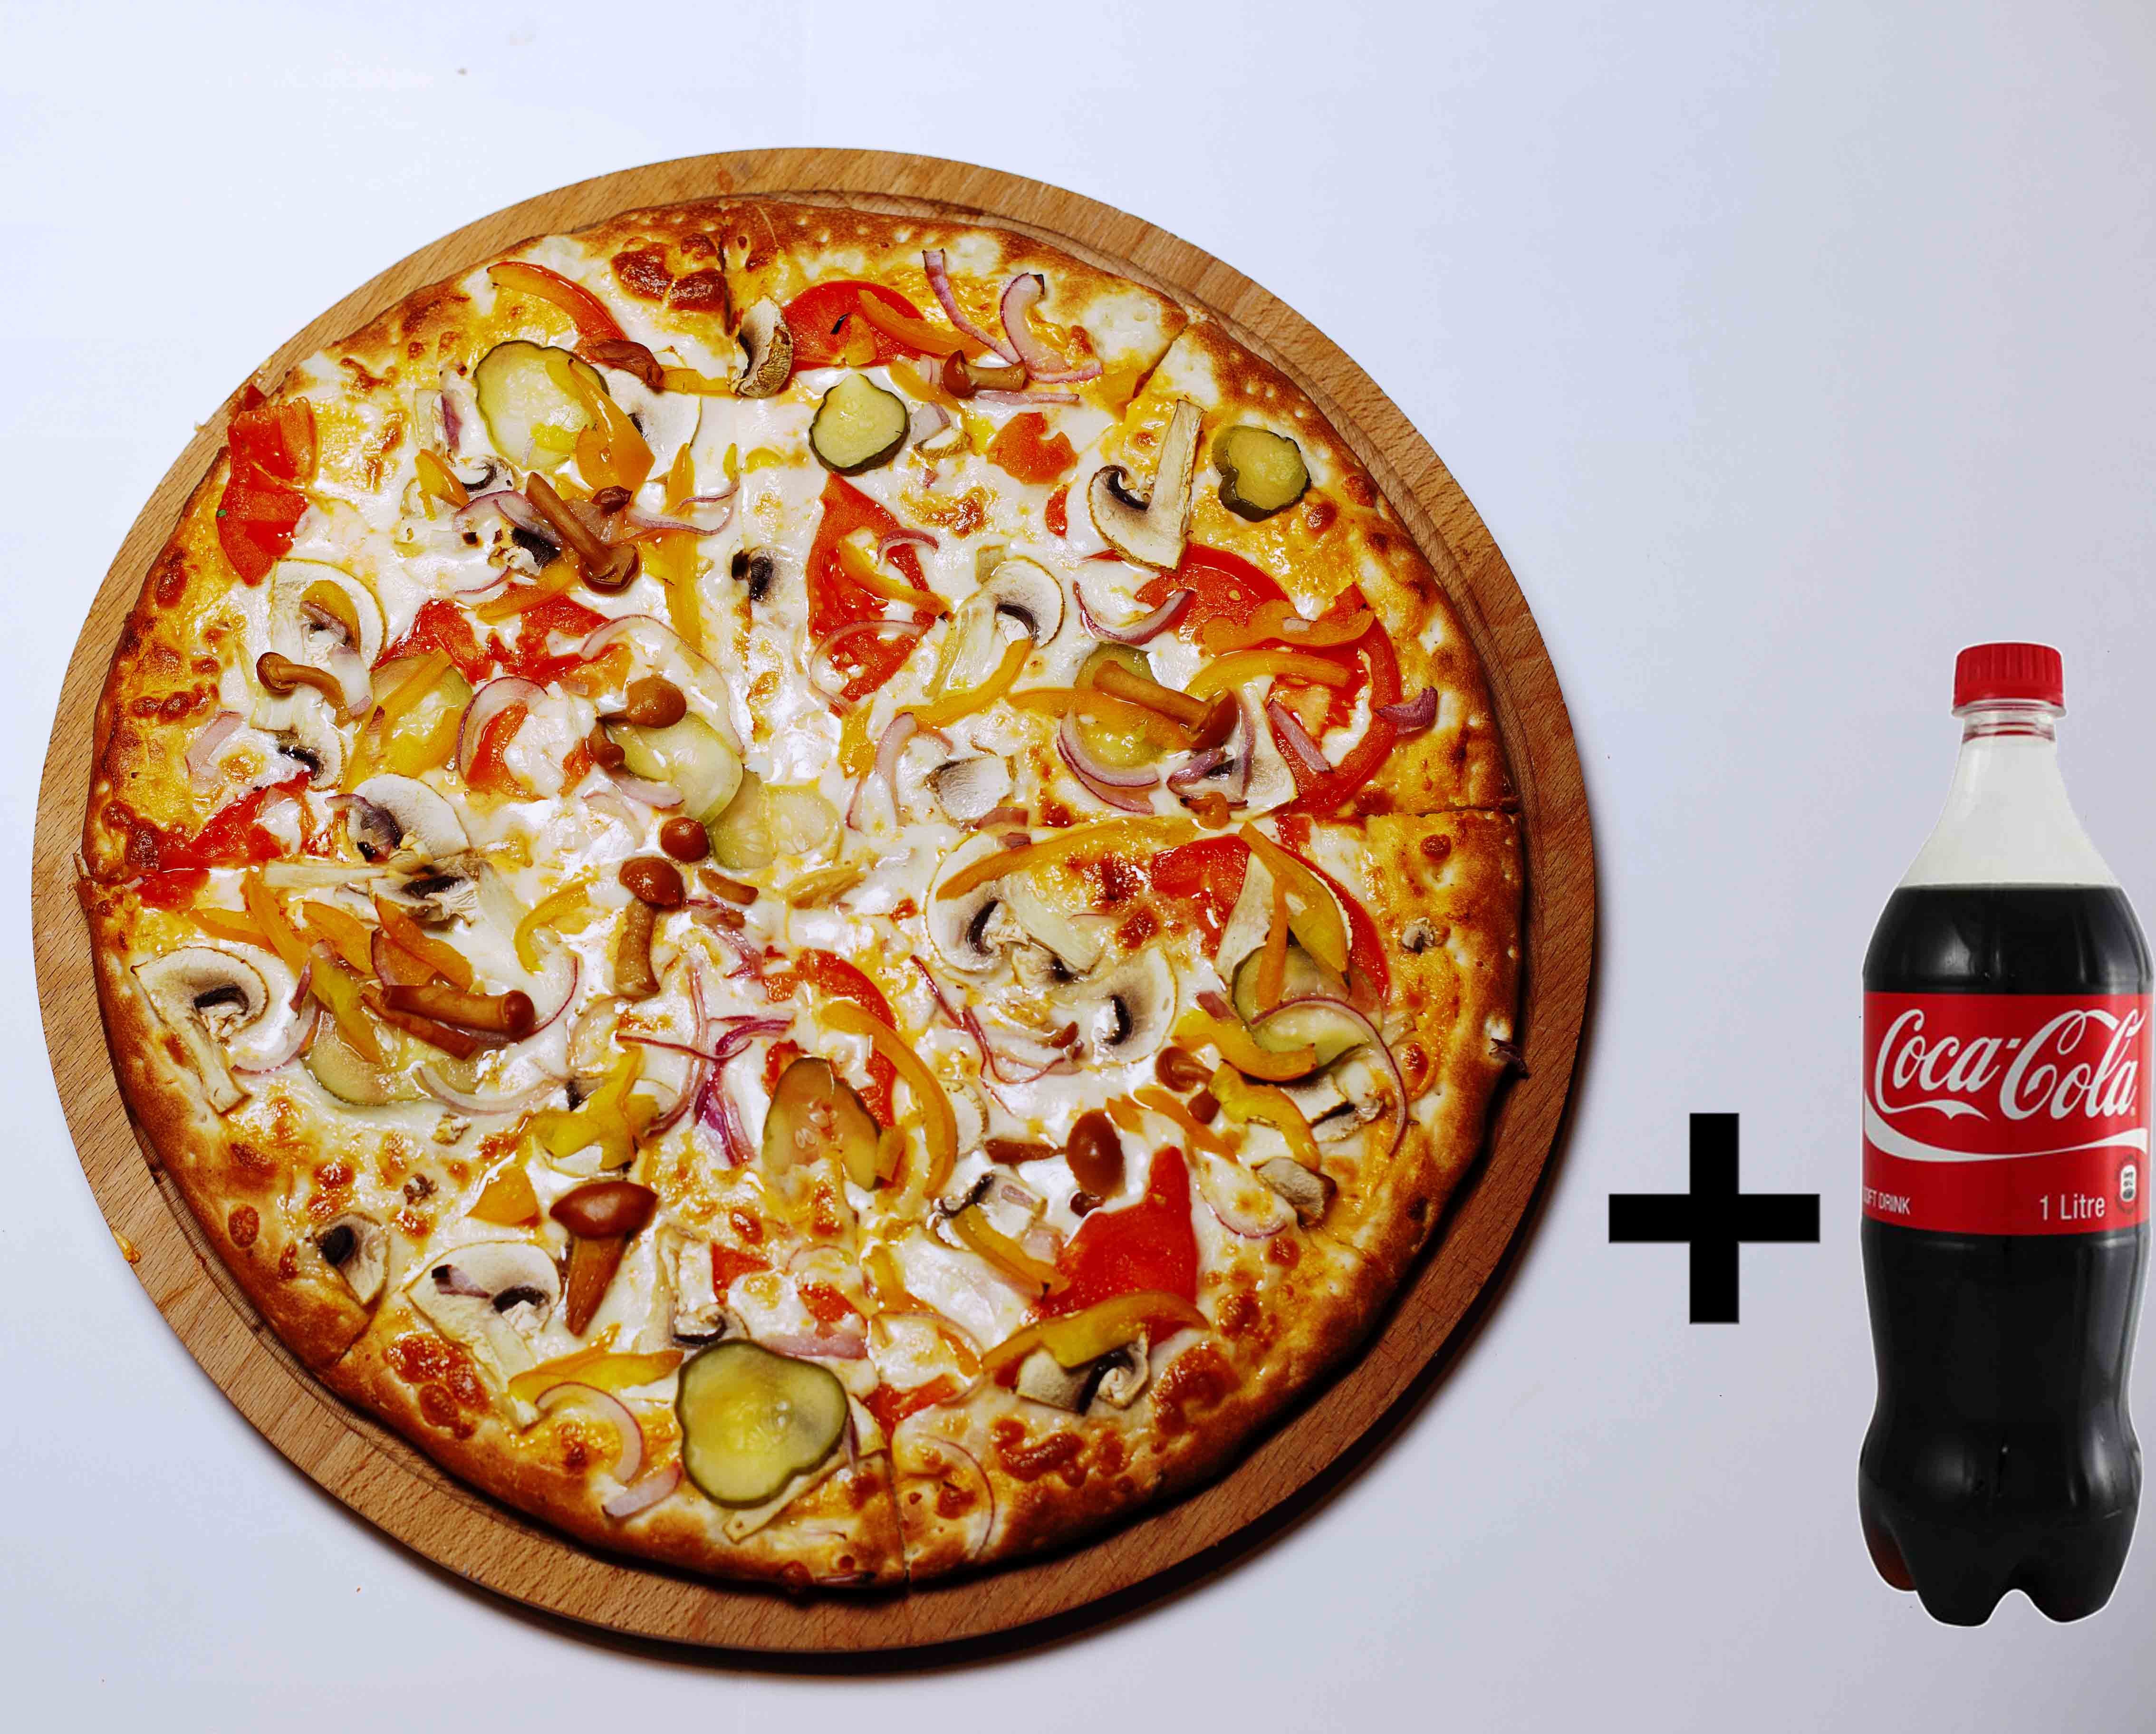 фотосессия с пиццей и колой фото 102